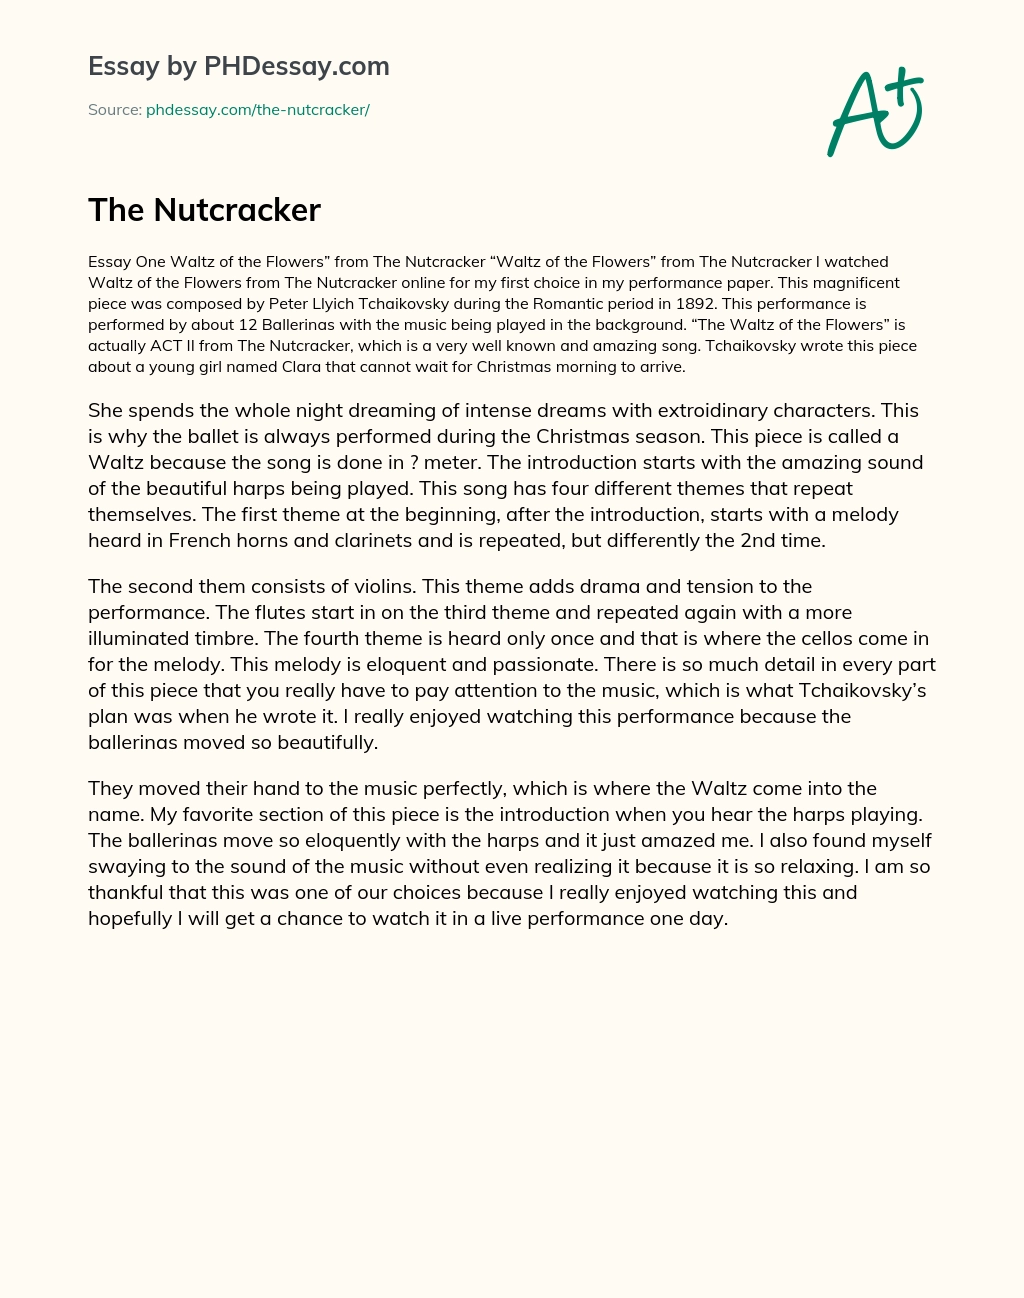 The Nutcracker essay